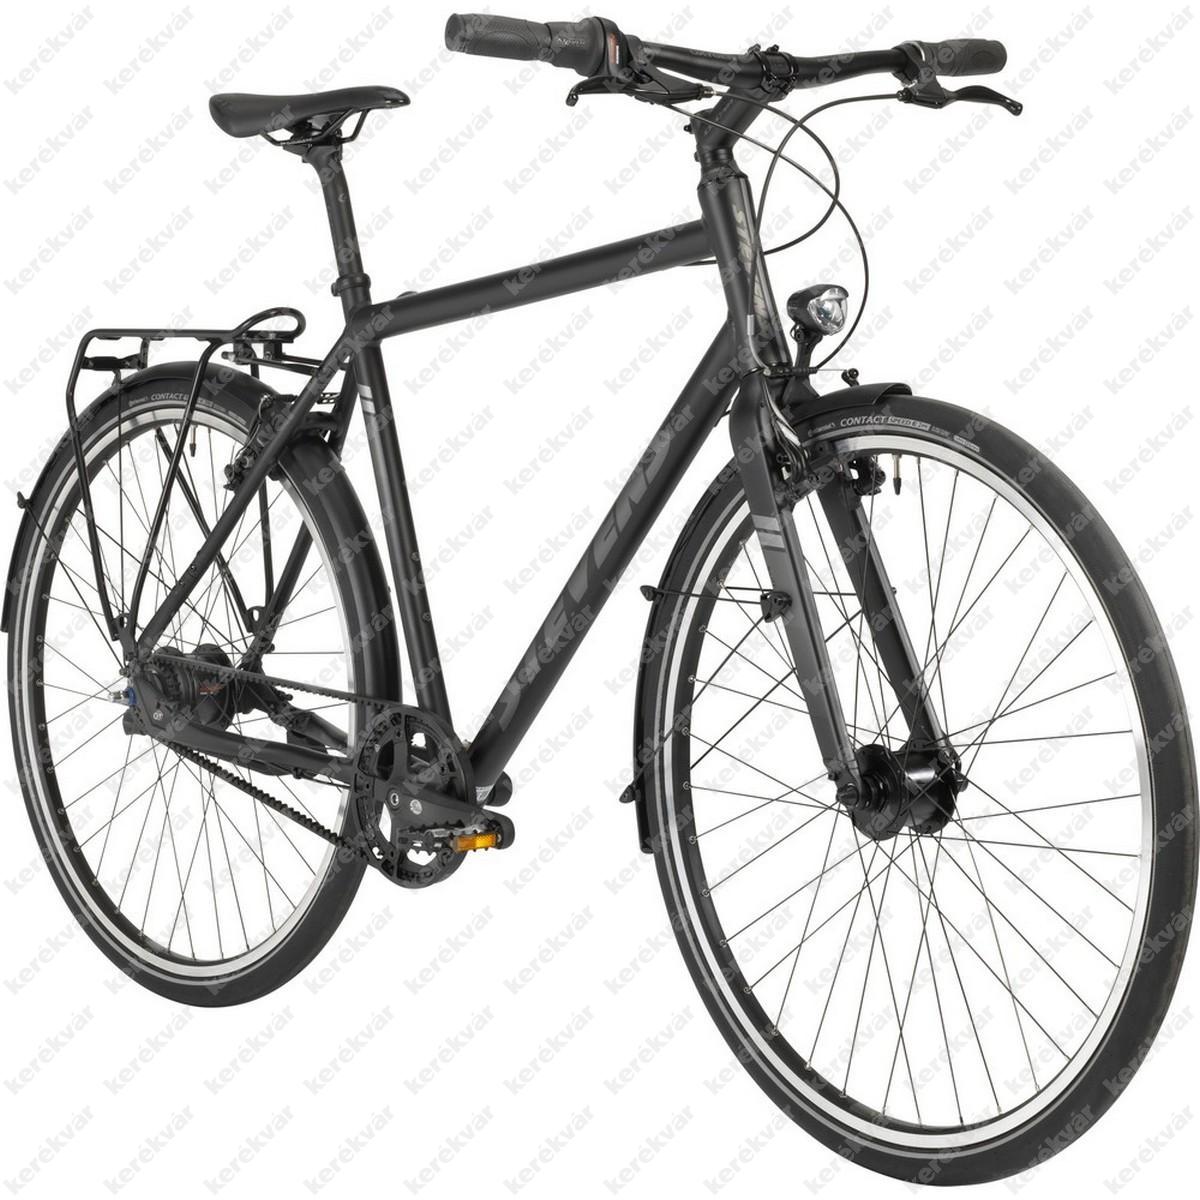 Stevens City Flight Luxe bicycle black 2020